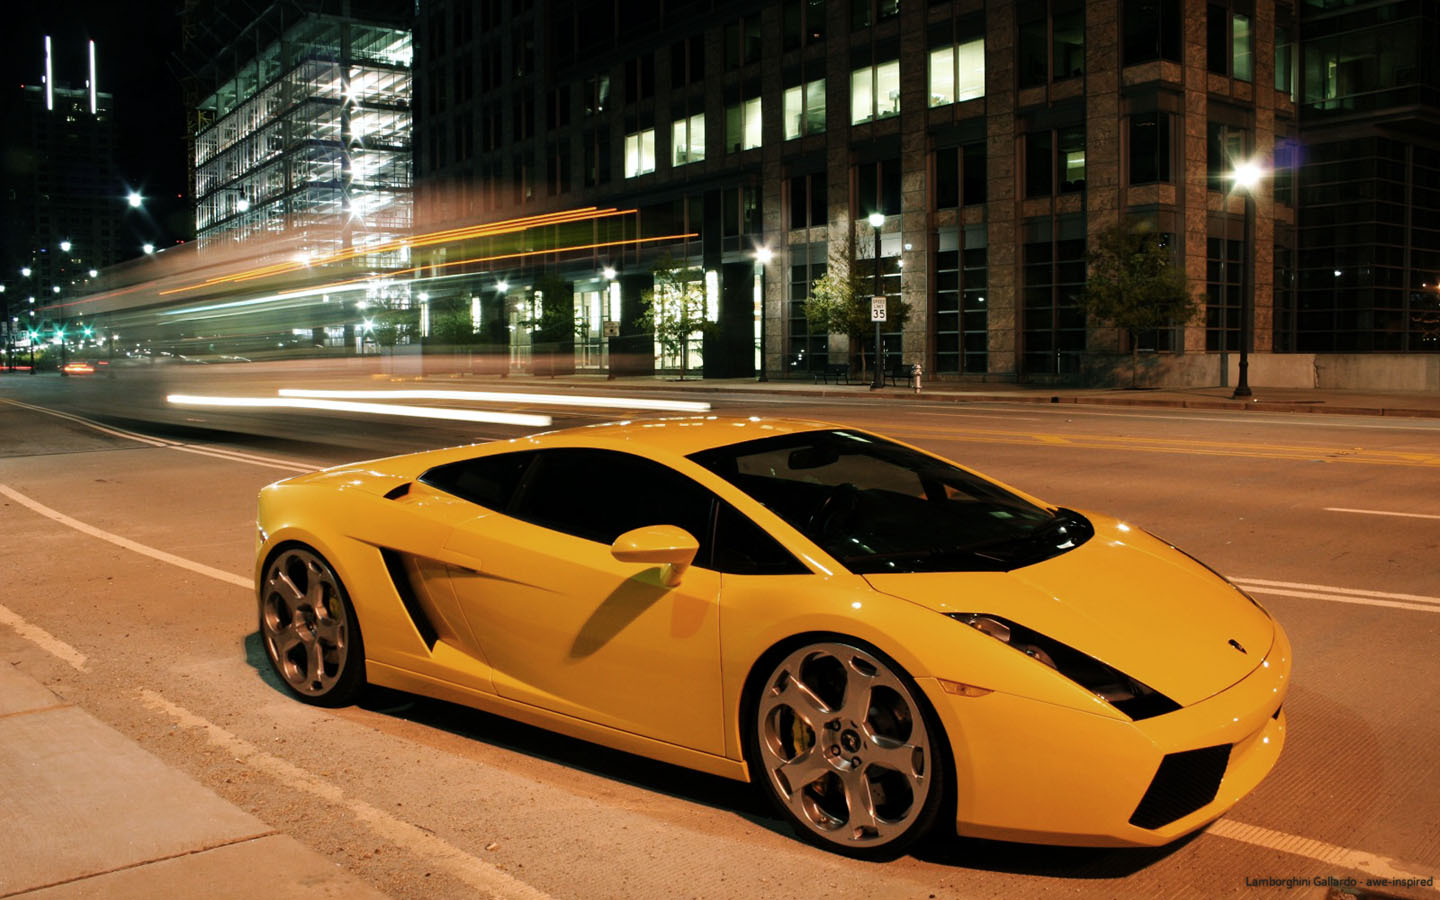 Lamborghini_Gallardo_City_by_awe_inspired.jpg